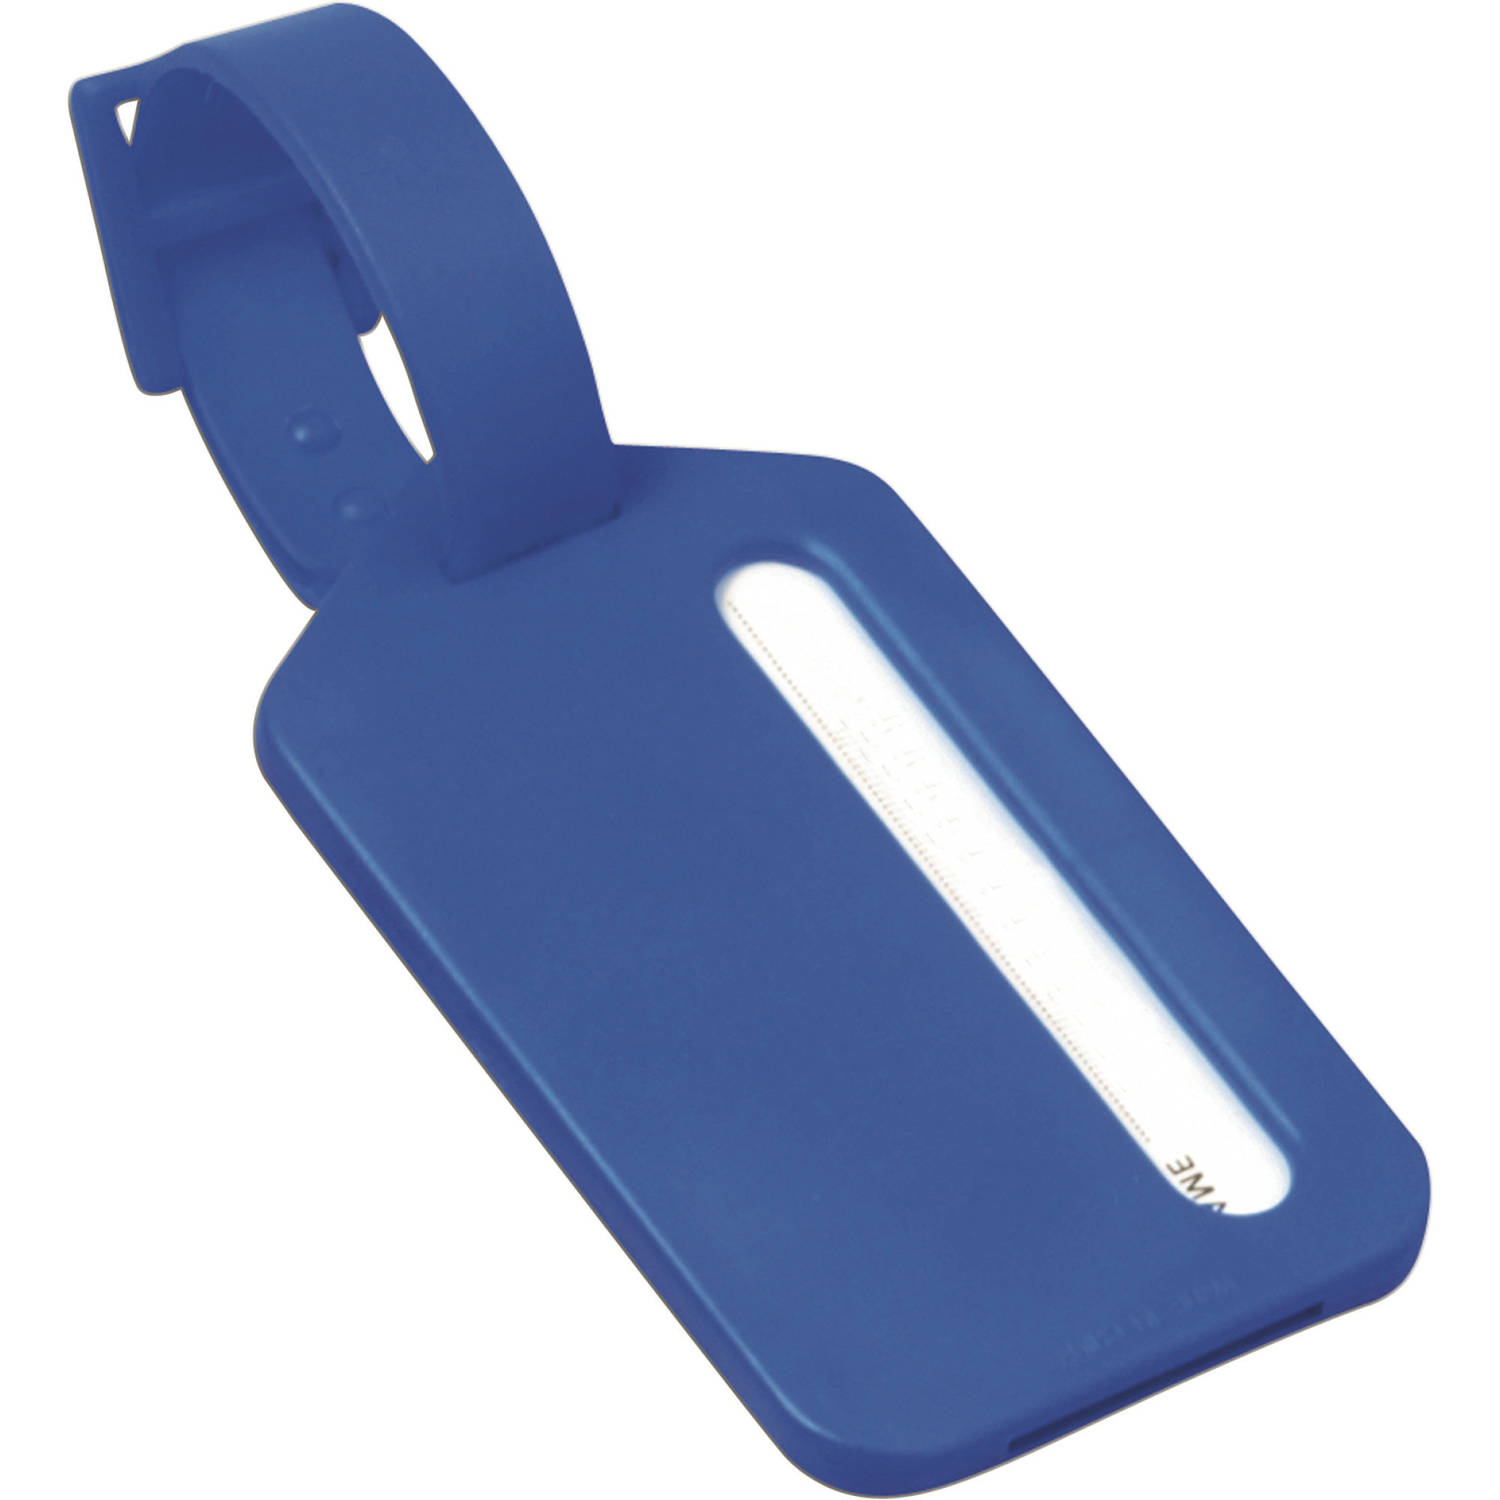 Kofferlabel Janina - blauw - 9 x 5 cm - reiskoffer/handbagage label